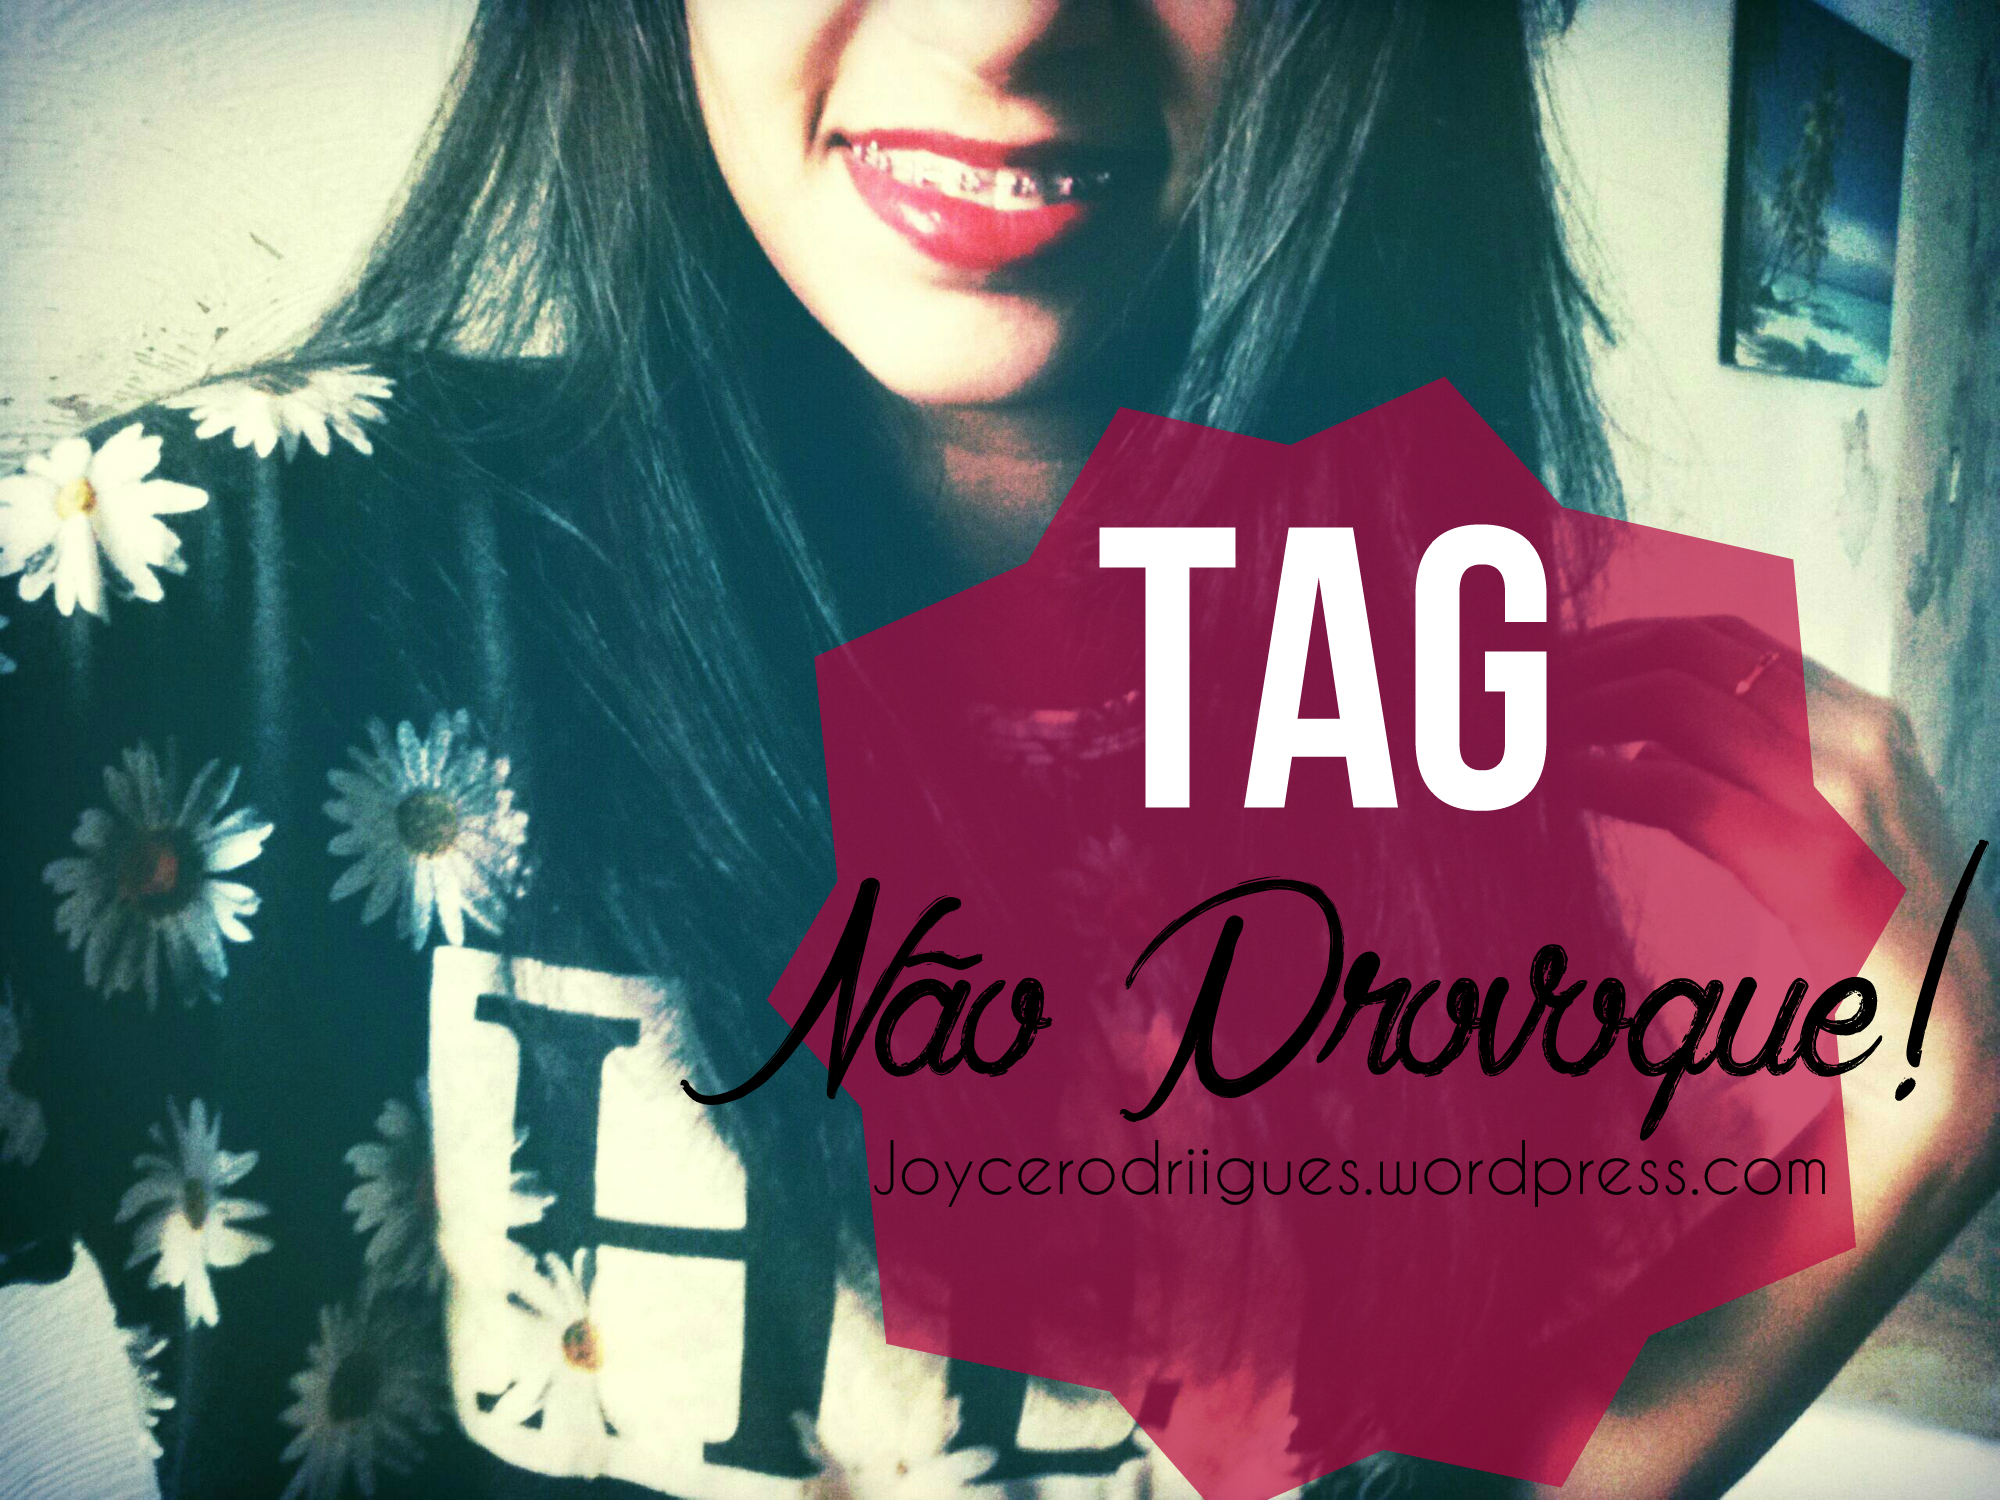 TAG+Nao Proveque+Blog+Joyce Rodrigues